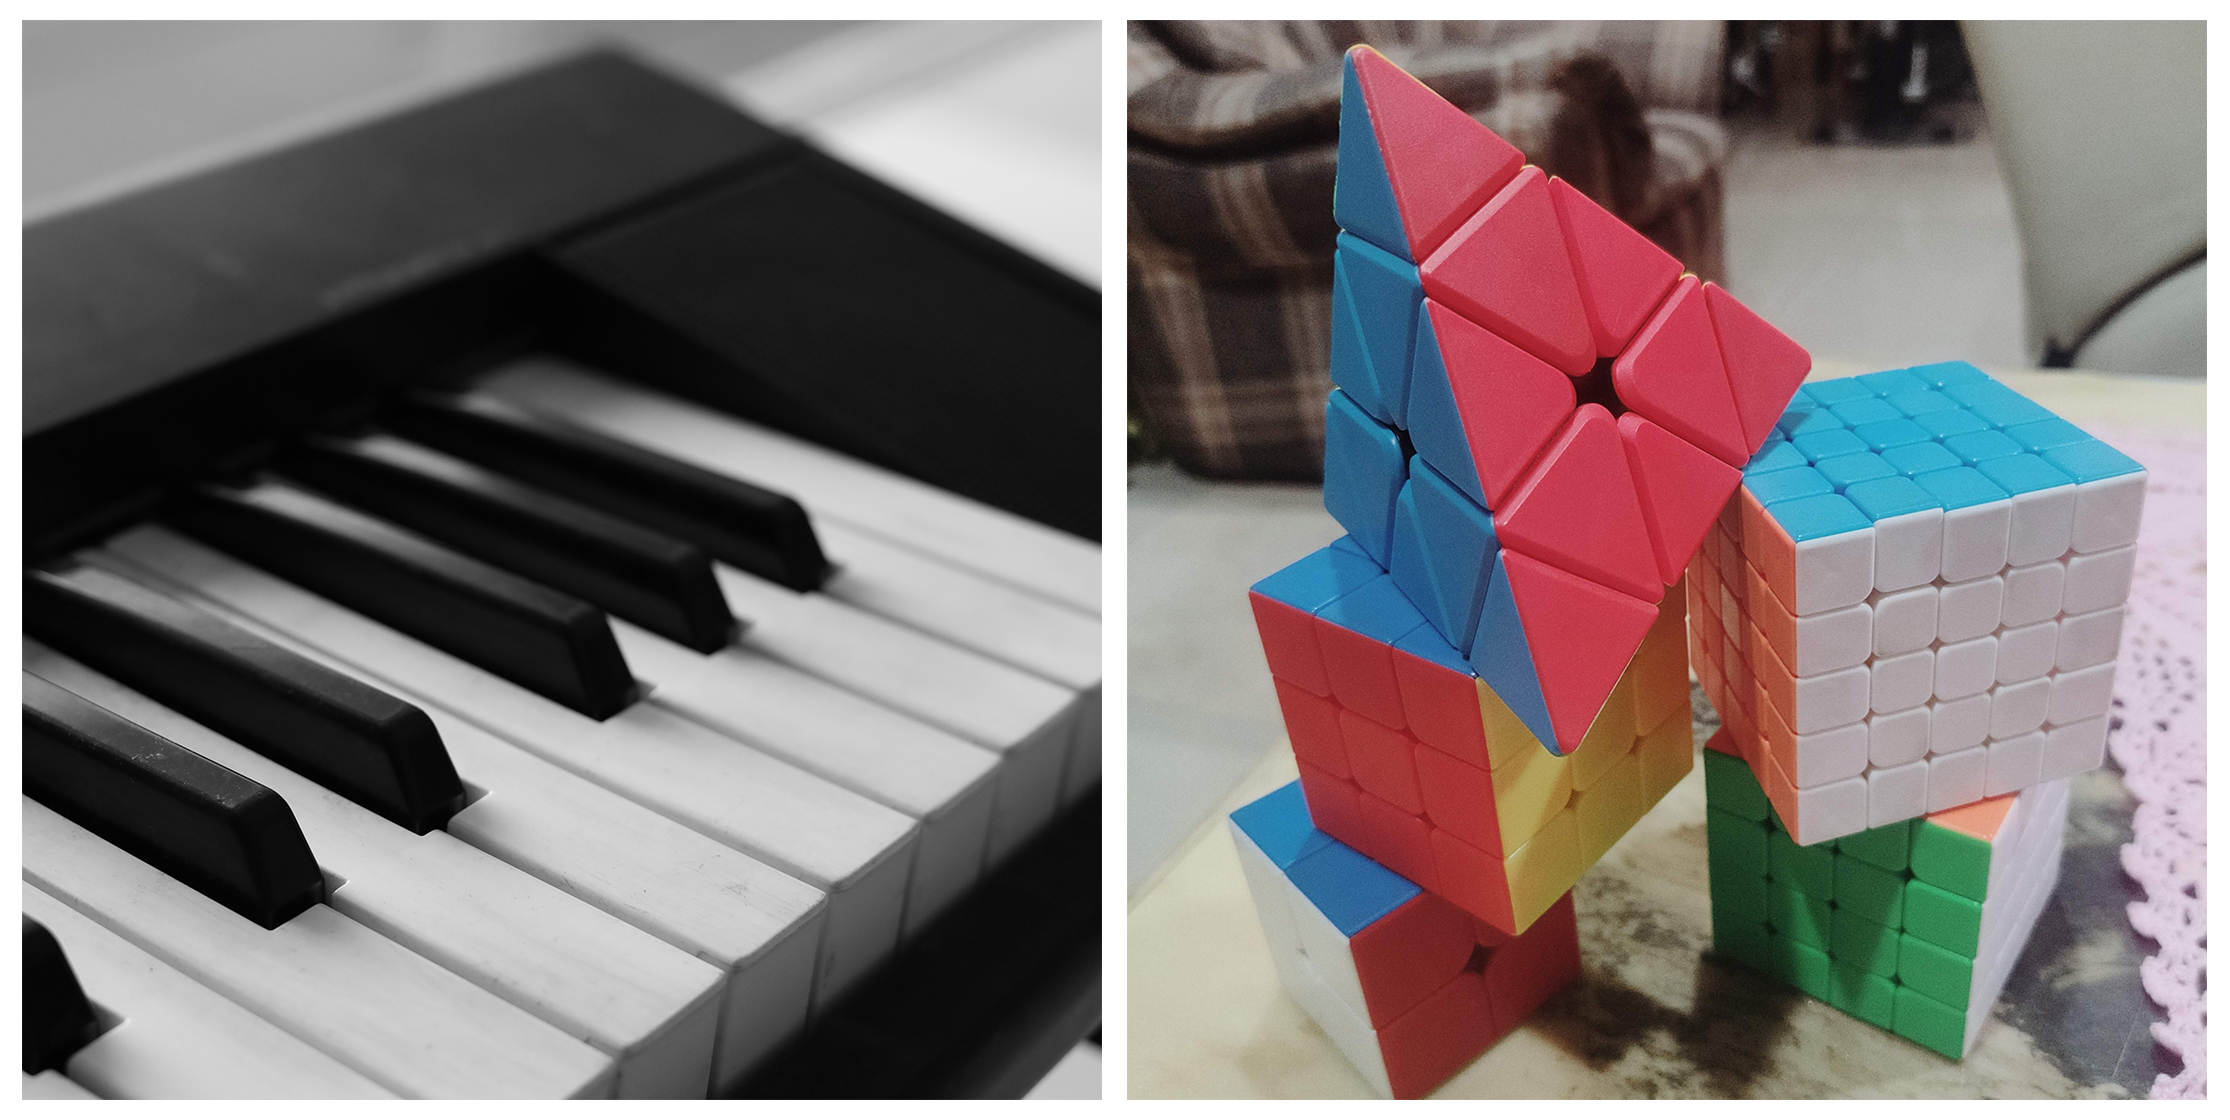 Piano and Rubik's cube